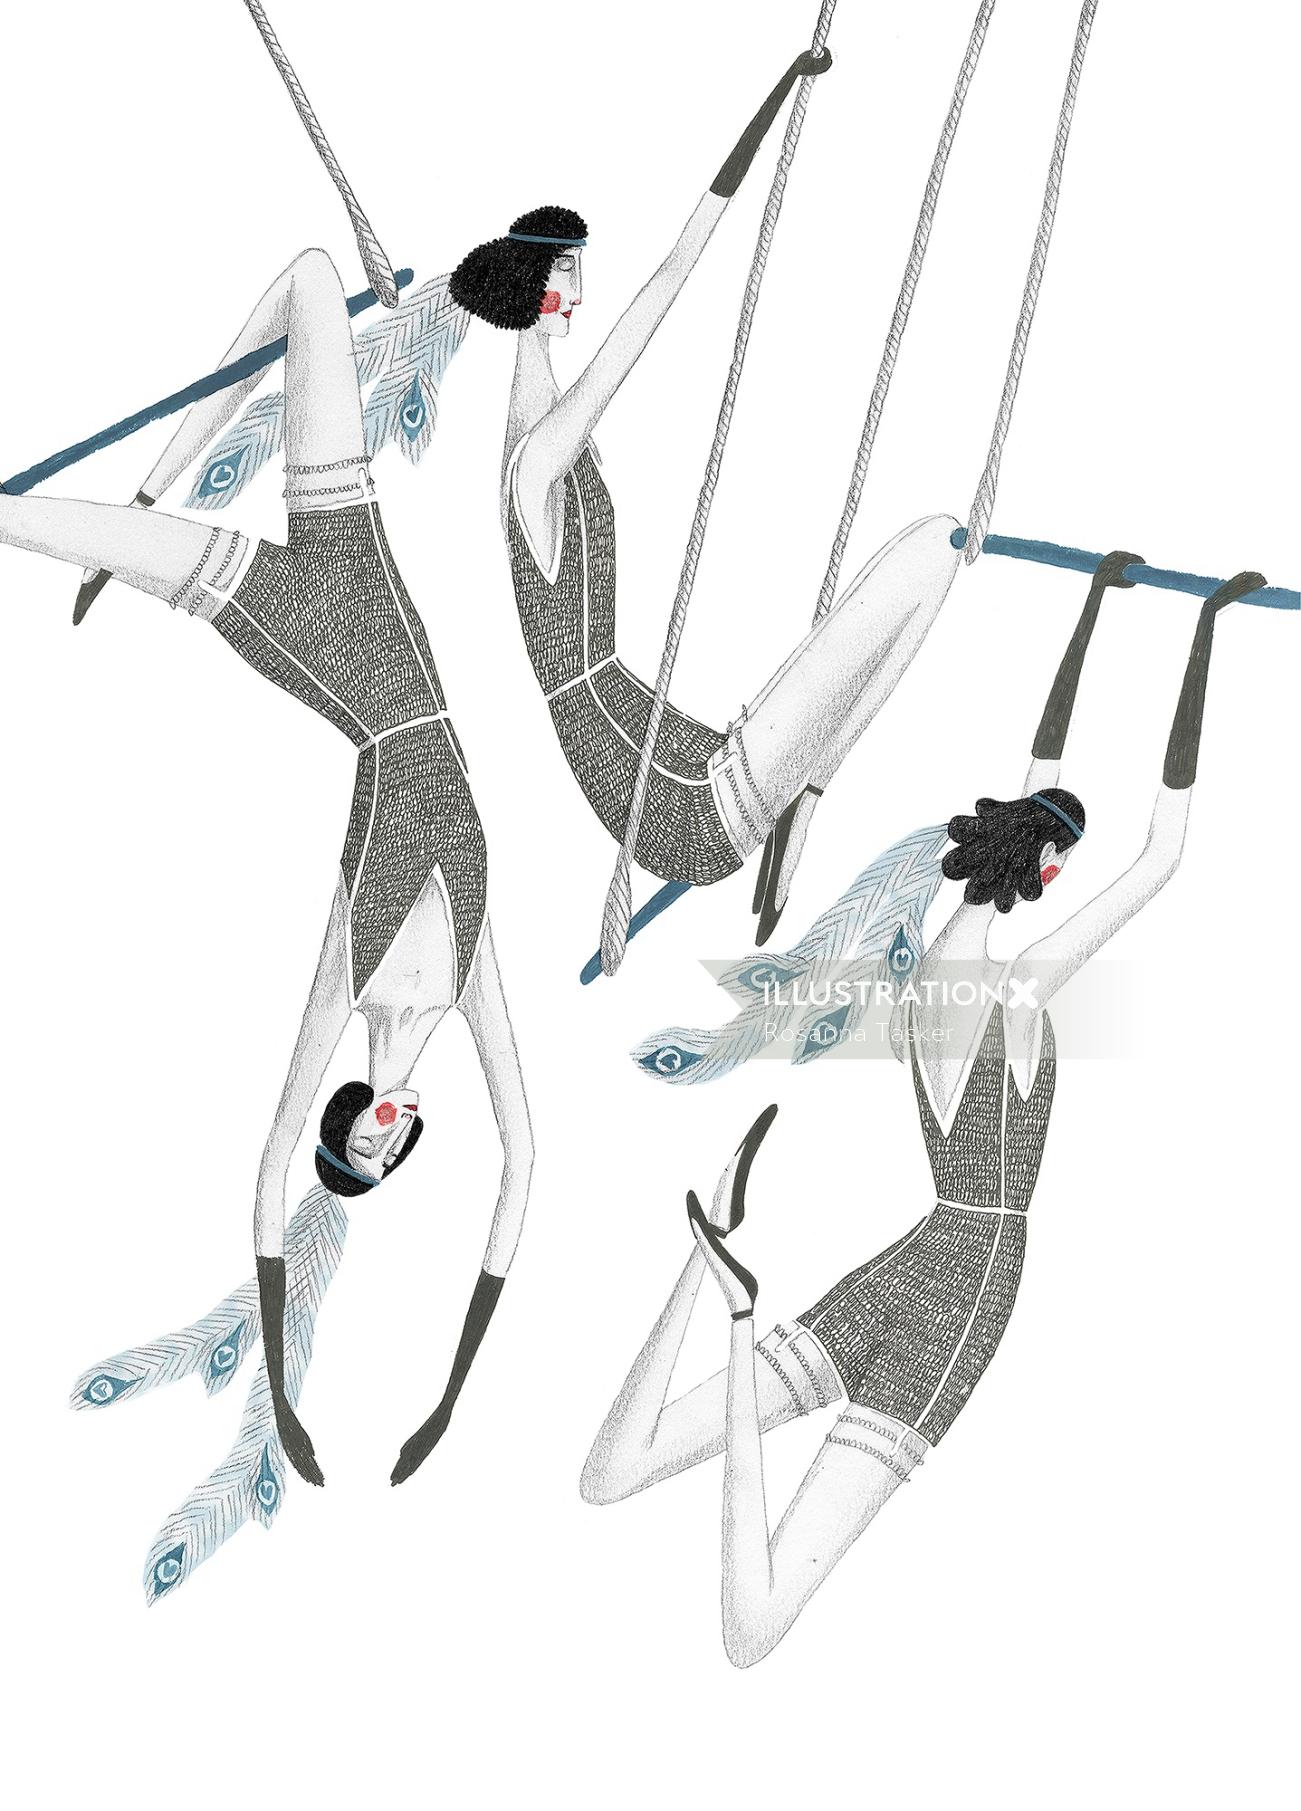 Illustration of circus trapeze swingers